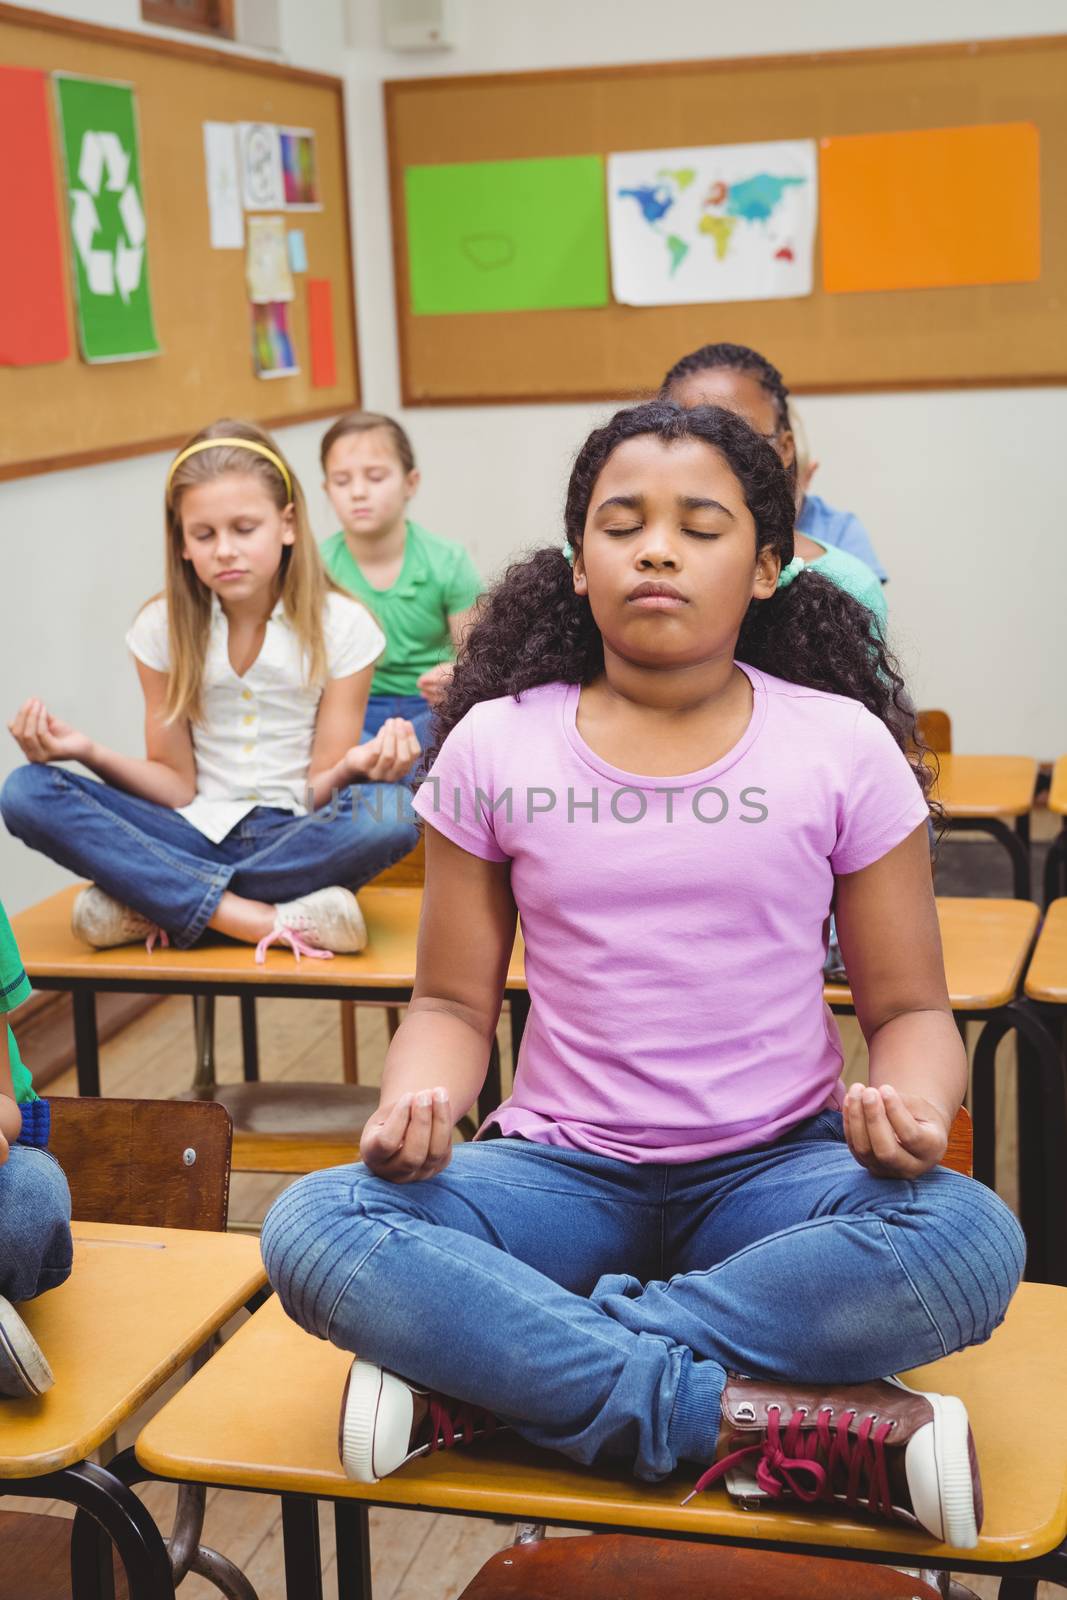 Pupils meditating on classroom desks at the elementary school